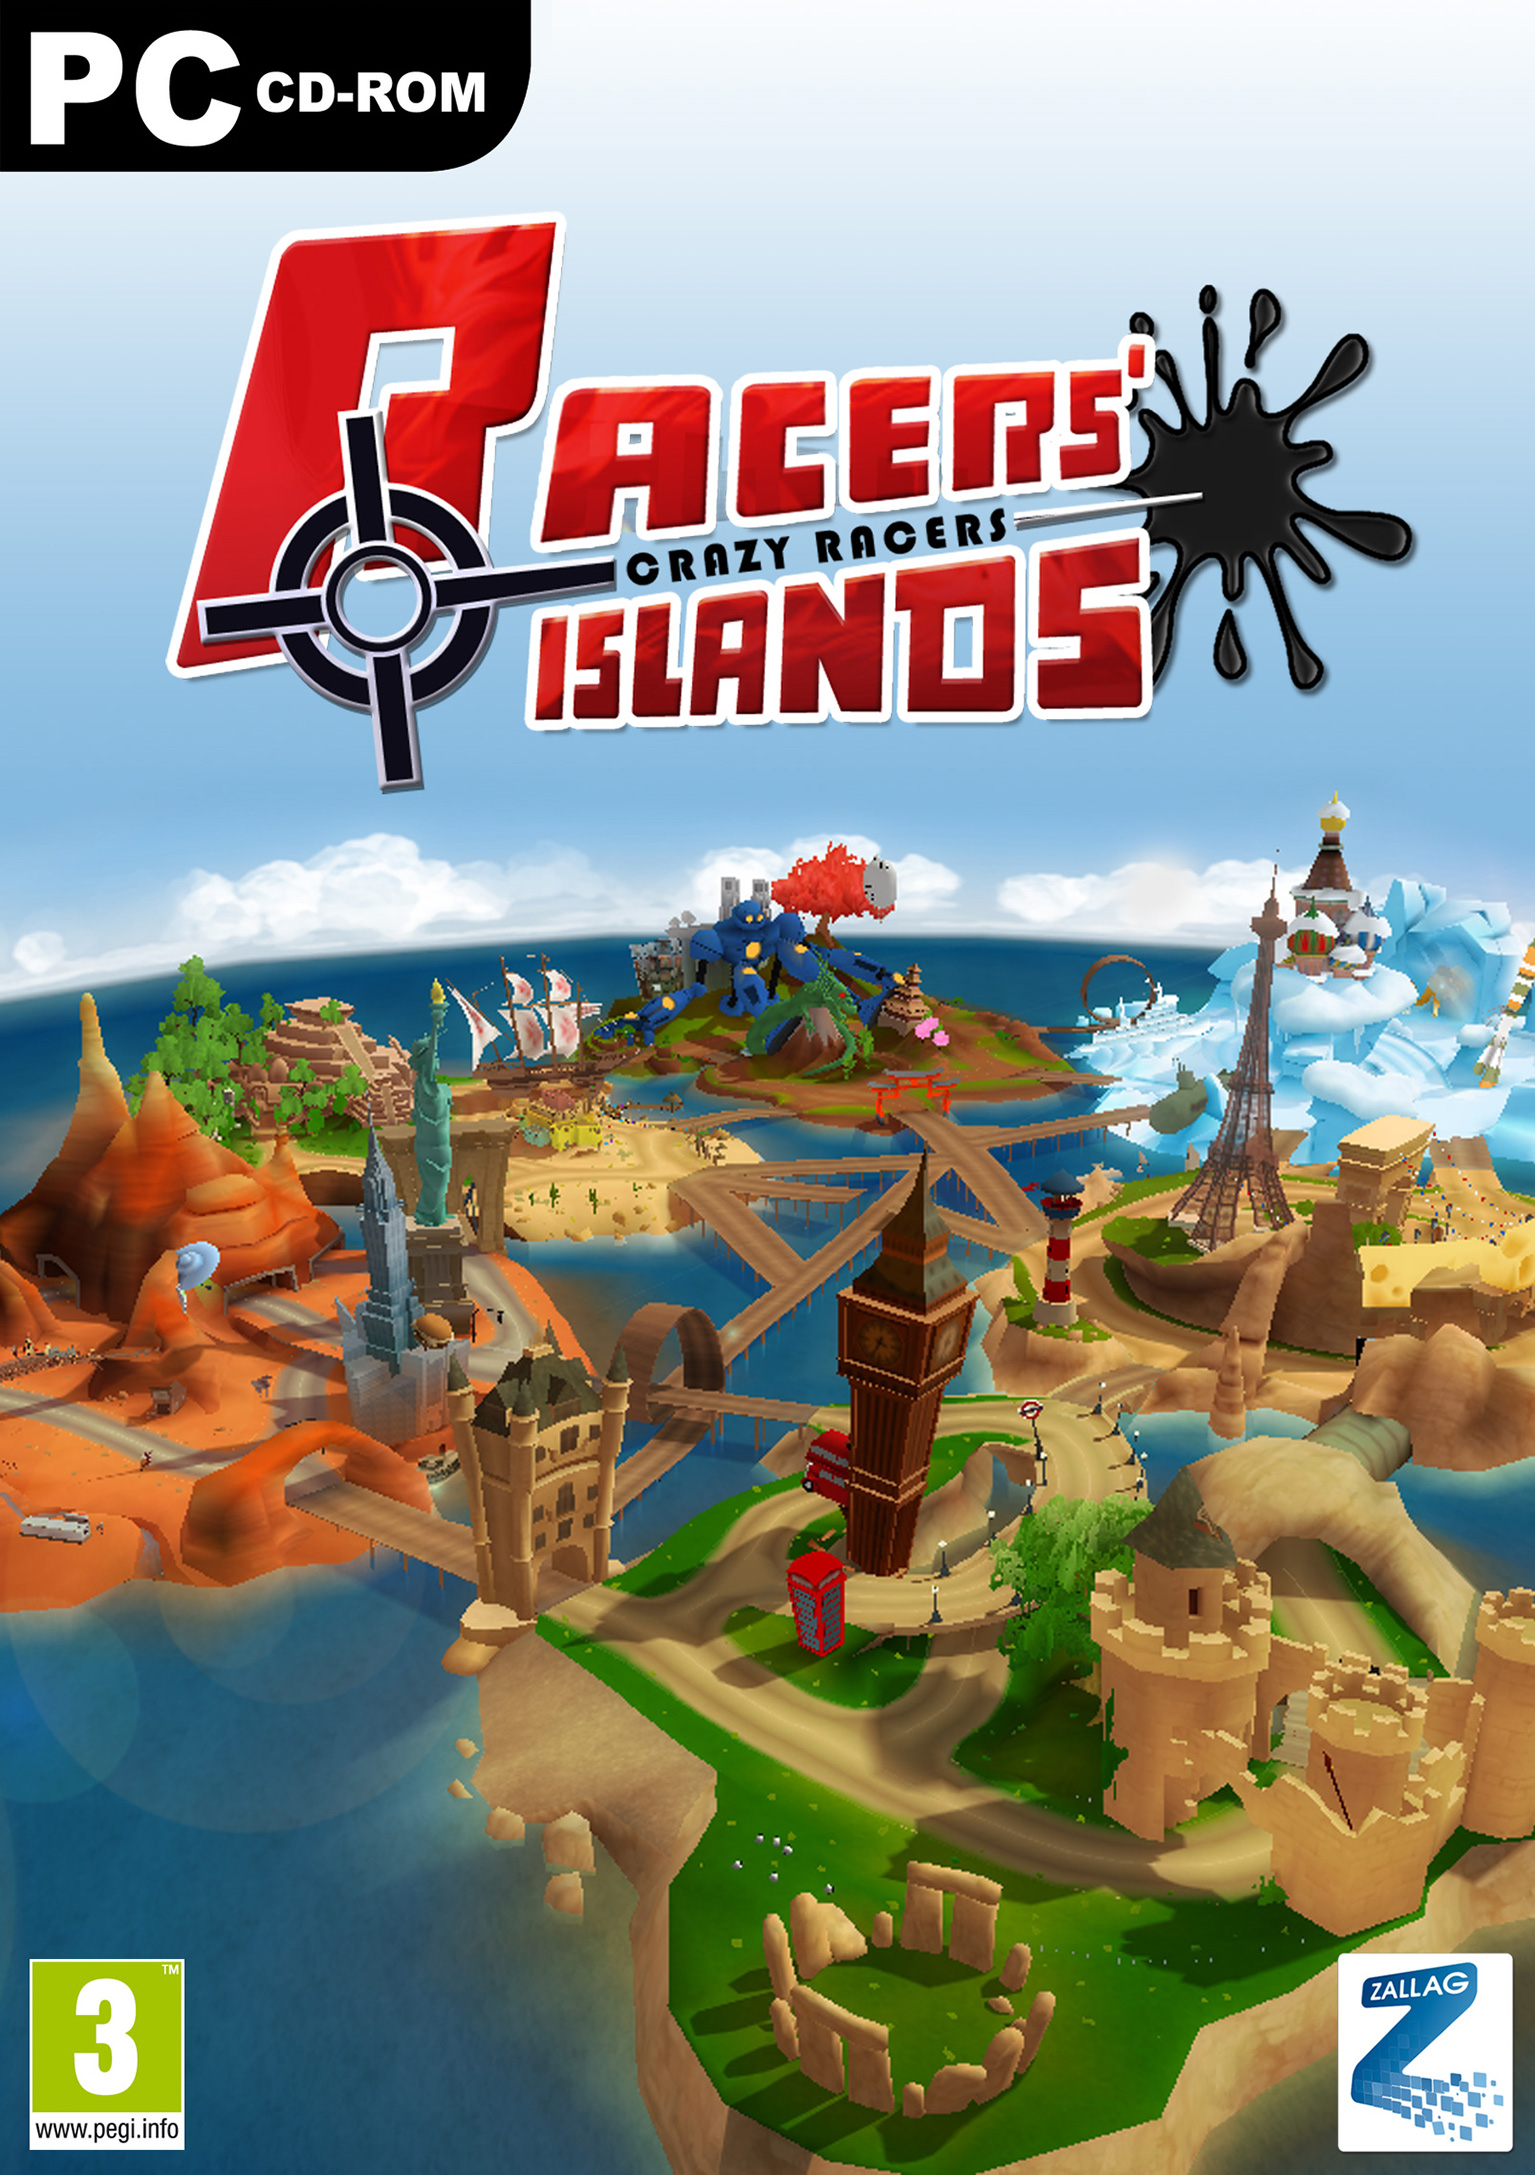 Racers' Islands: Crazy Racers - pedn DVD obal